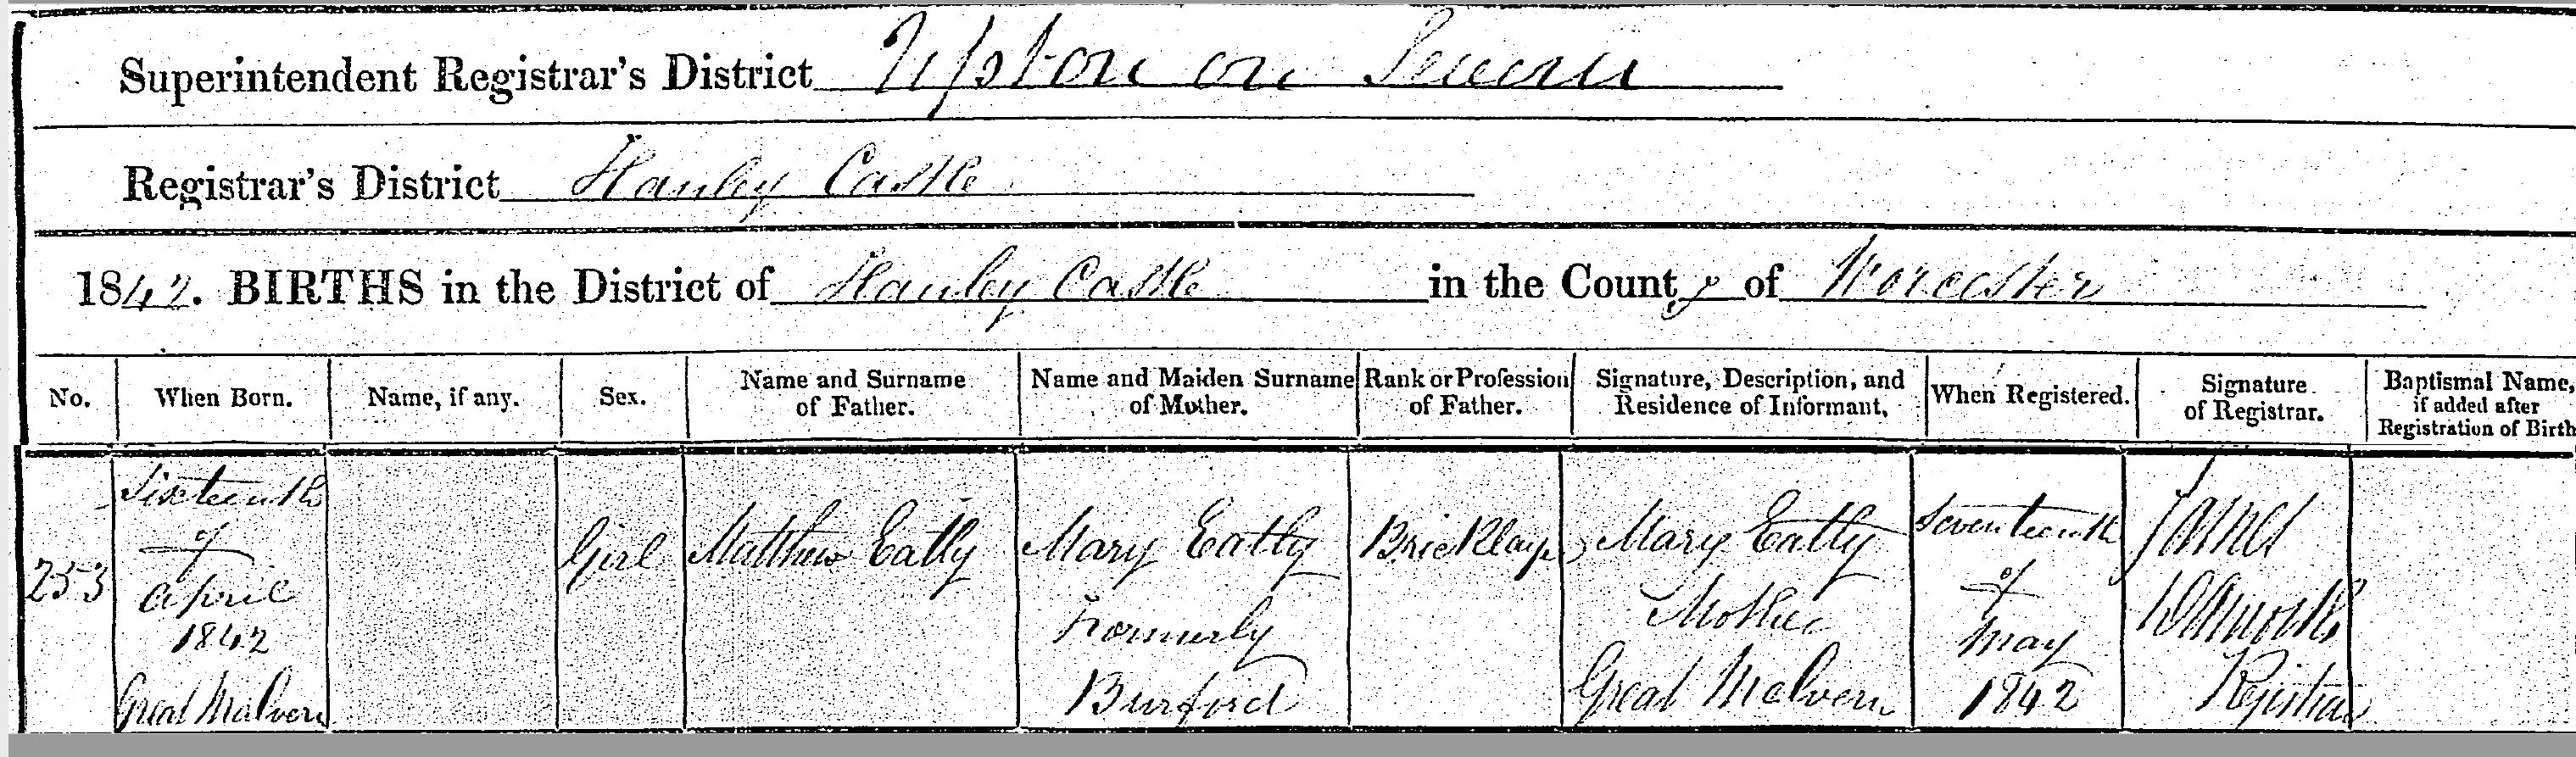 Emily 1842 birth certificate.